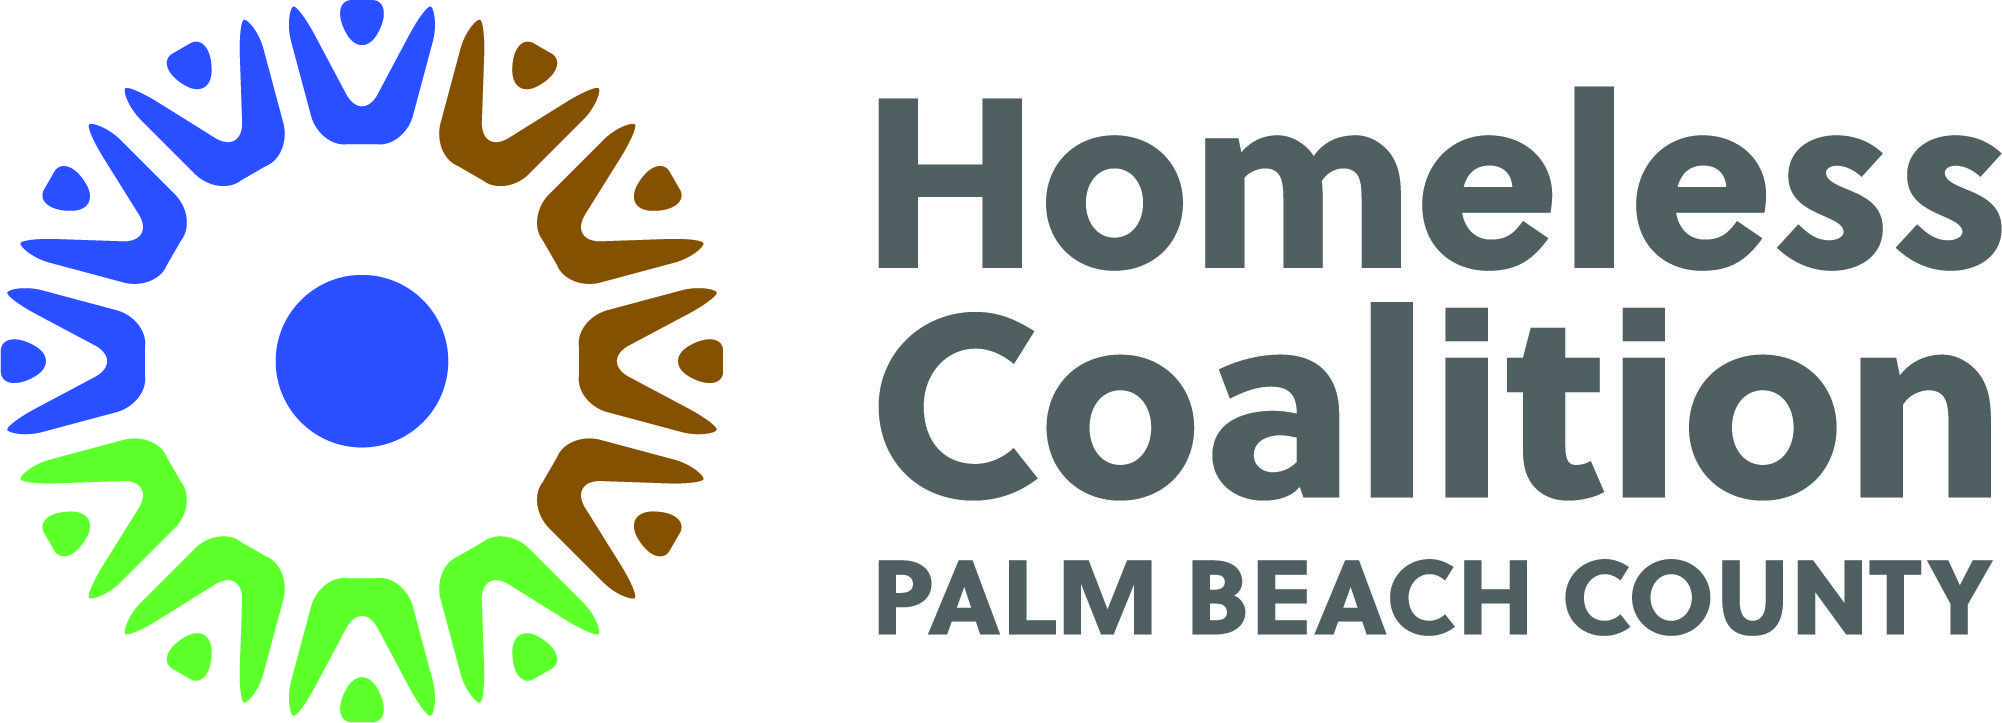 Homeless Logo - Homeless Coalition of Palm Beach County